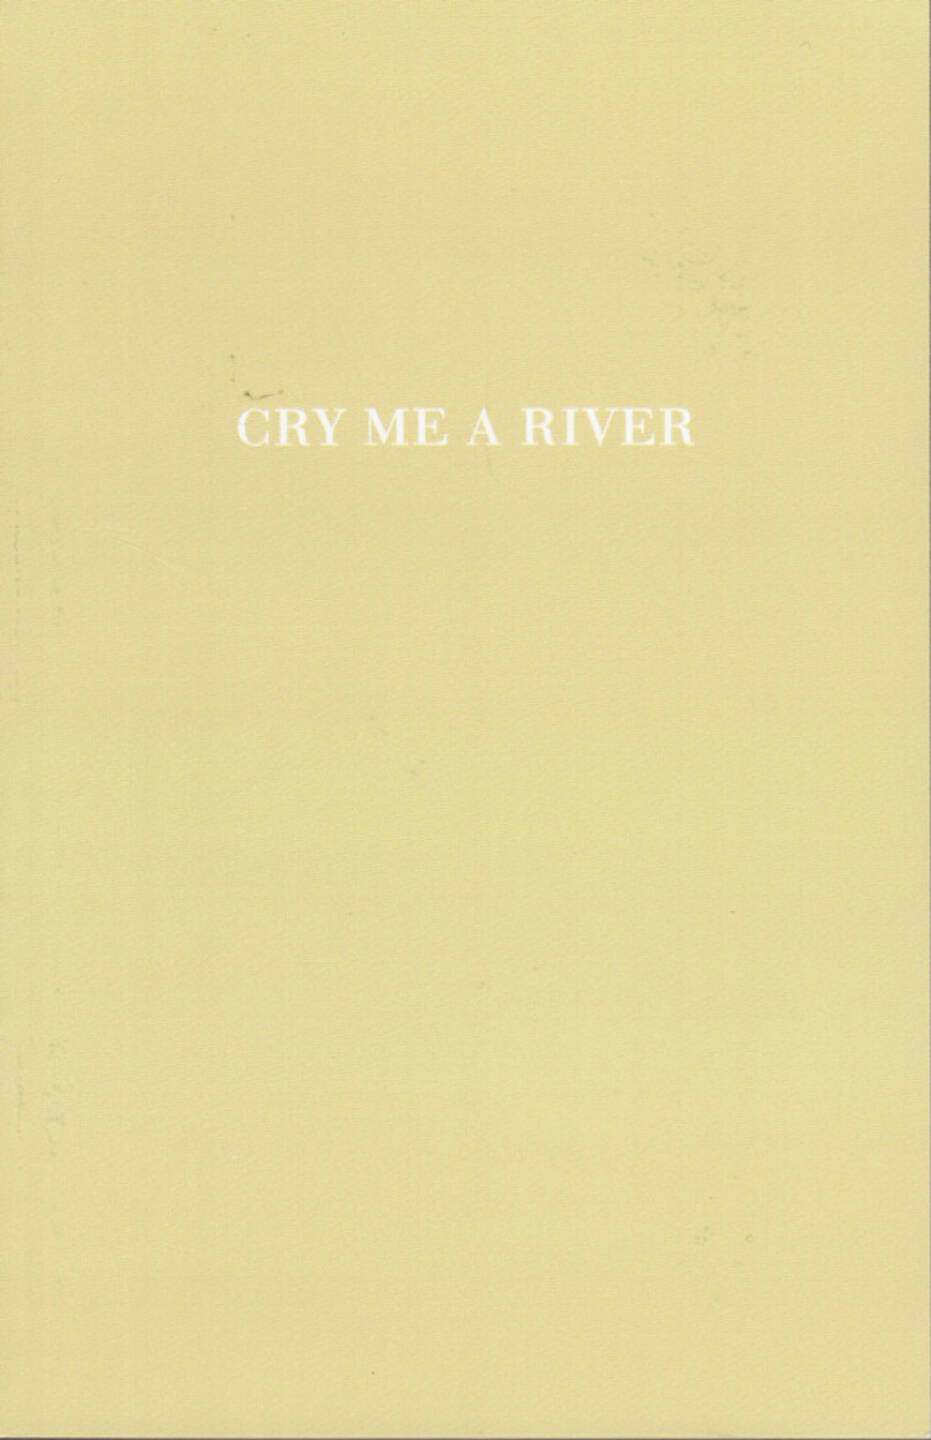 Thomas Mailaender - Cry Me A River, RVB Books, 2014, Beispielseiten, sample spreads -  http://josefchladek.com/book/thomas_mailaender_-_cry_me_a_river